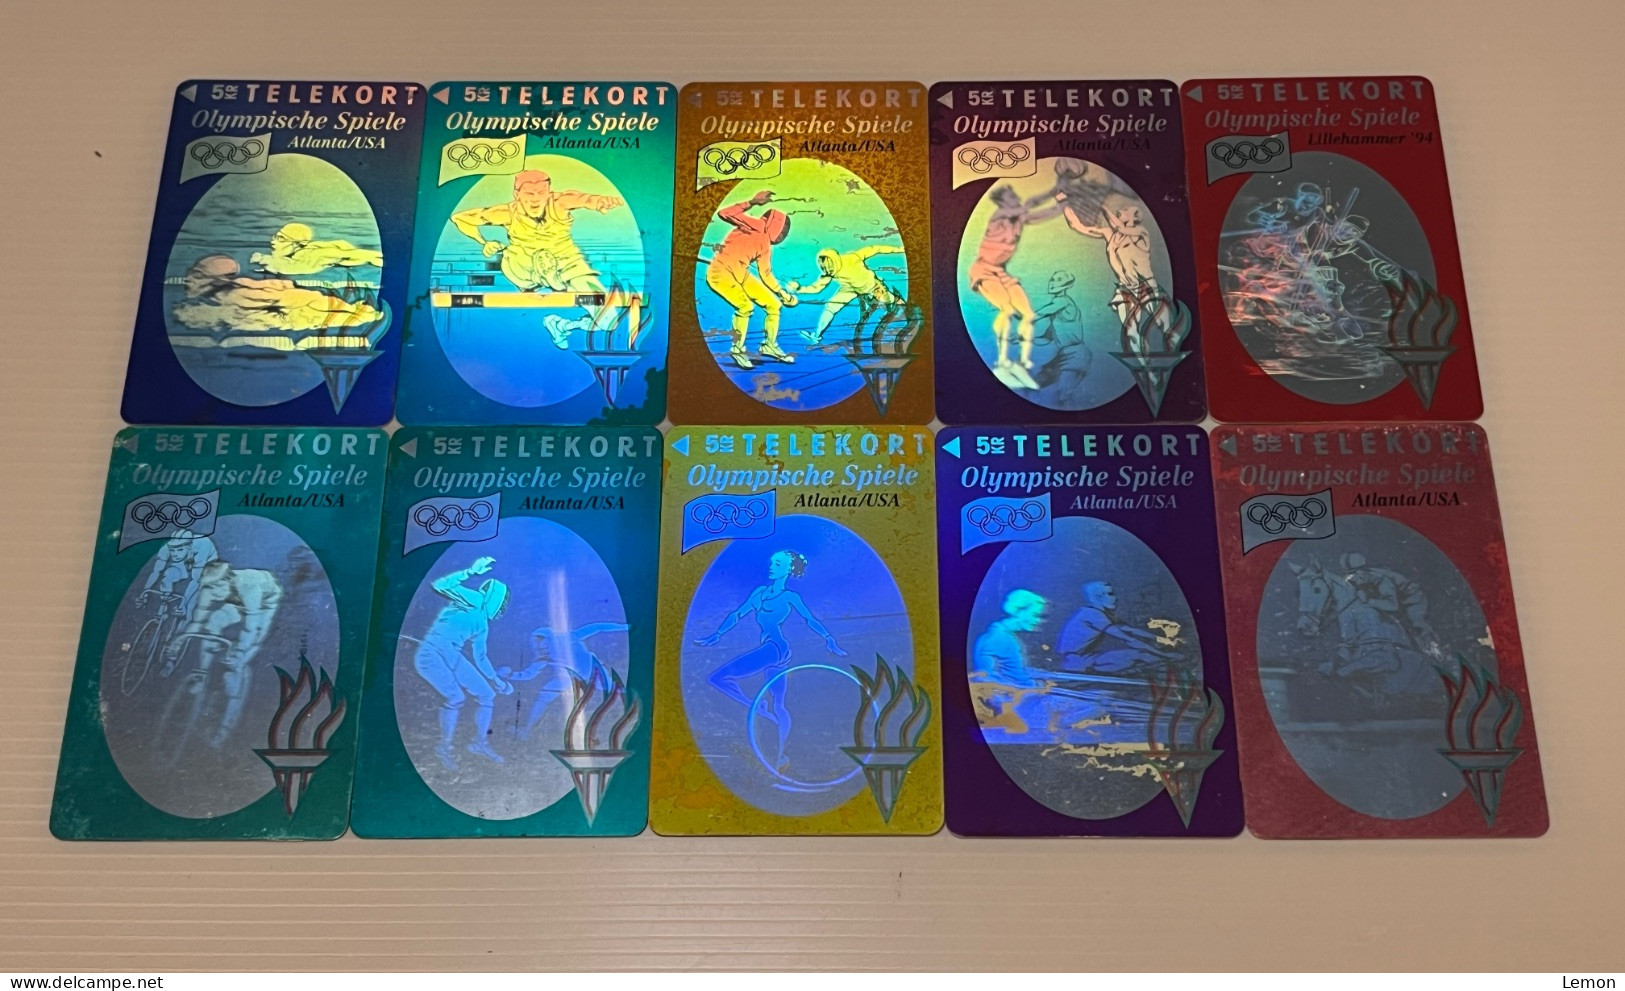 Mint Denmark / Danmark Phonecard, Hologram Atlanta Olympic USA - Olympische Spiele, Set Of 10 Mint Cards - Danemark